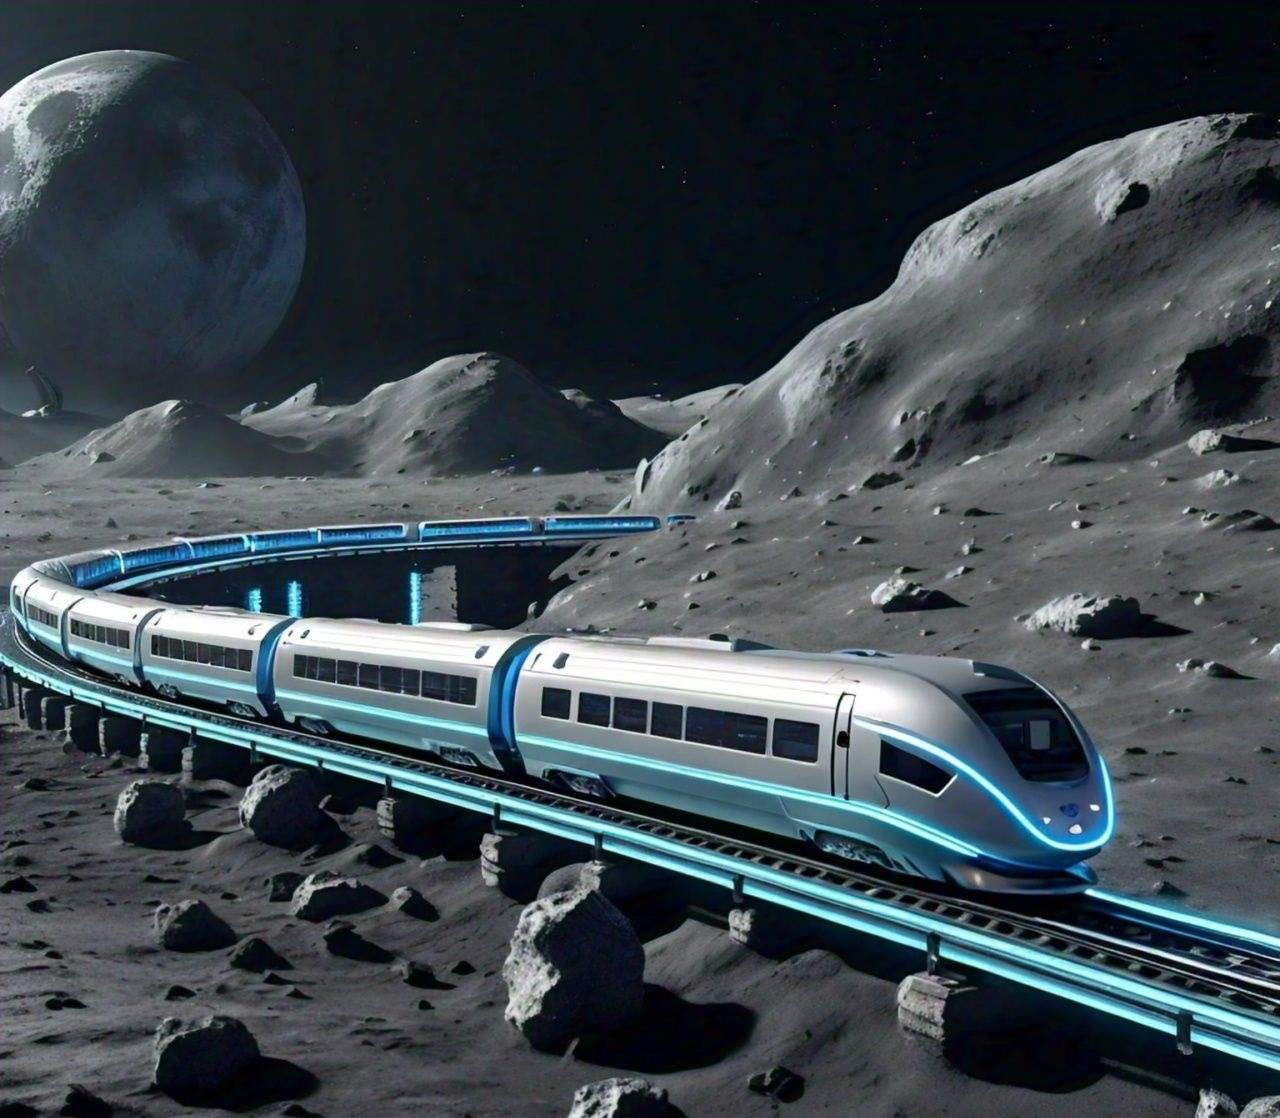 Moon Railway: A Futuristic Transportation System for Lunar Exploration